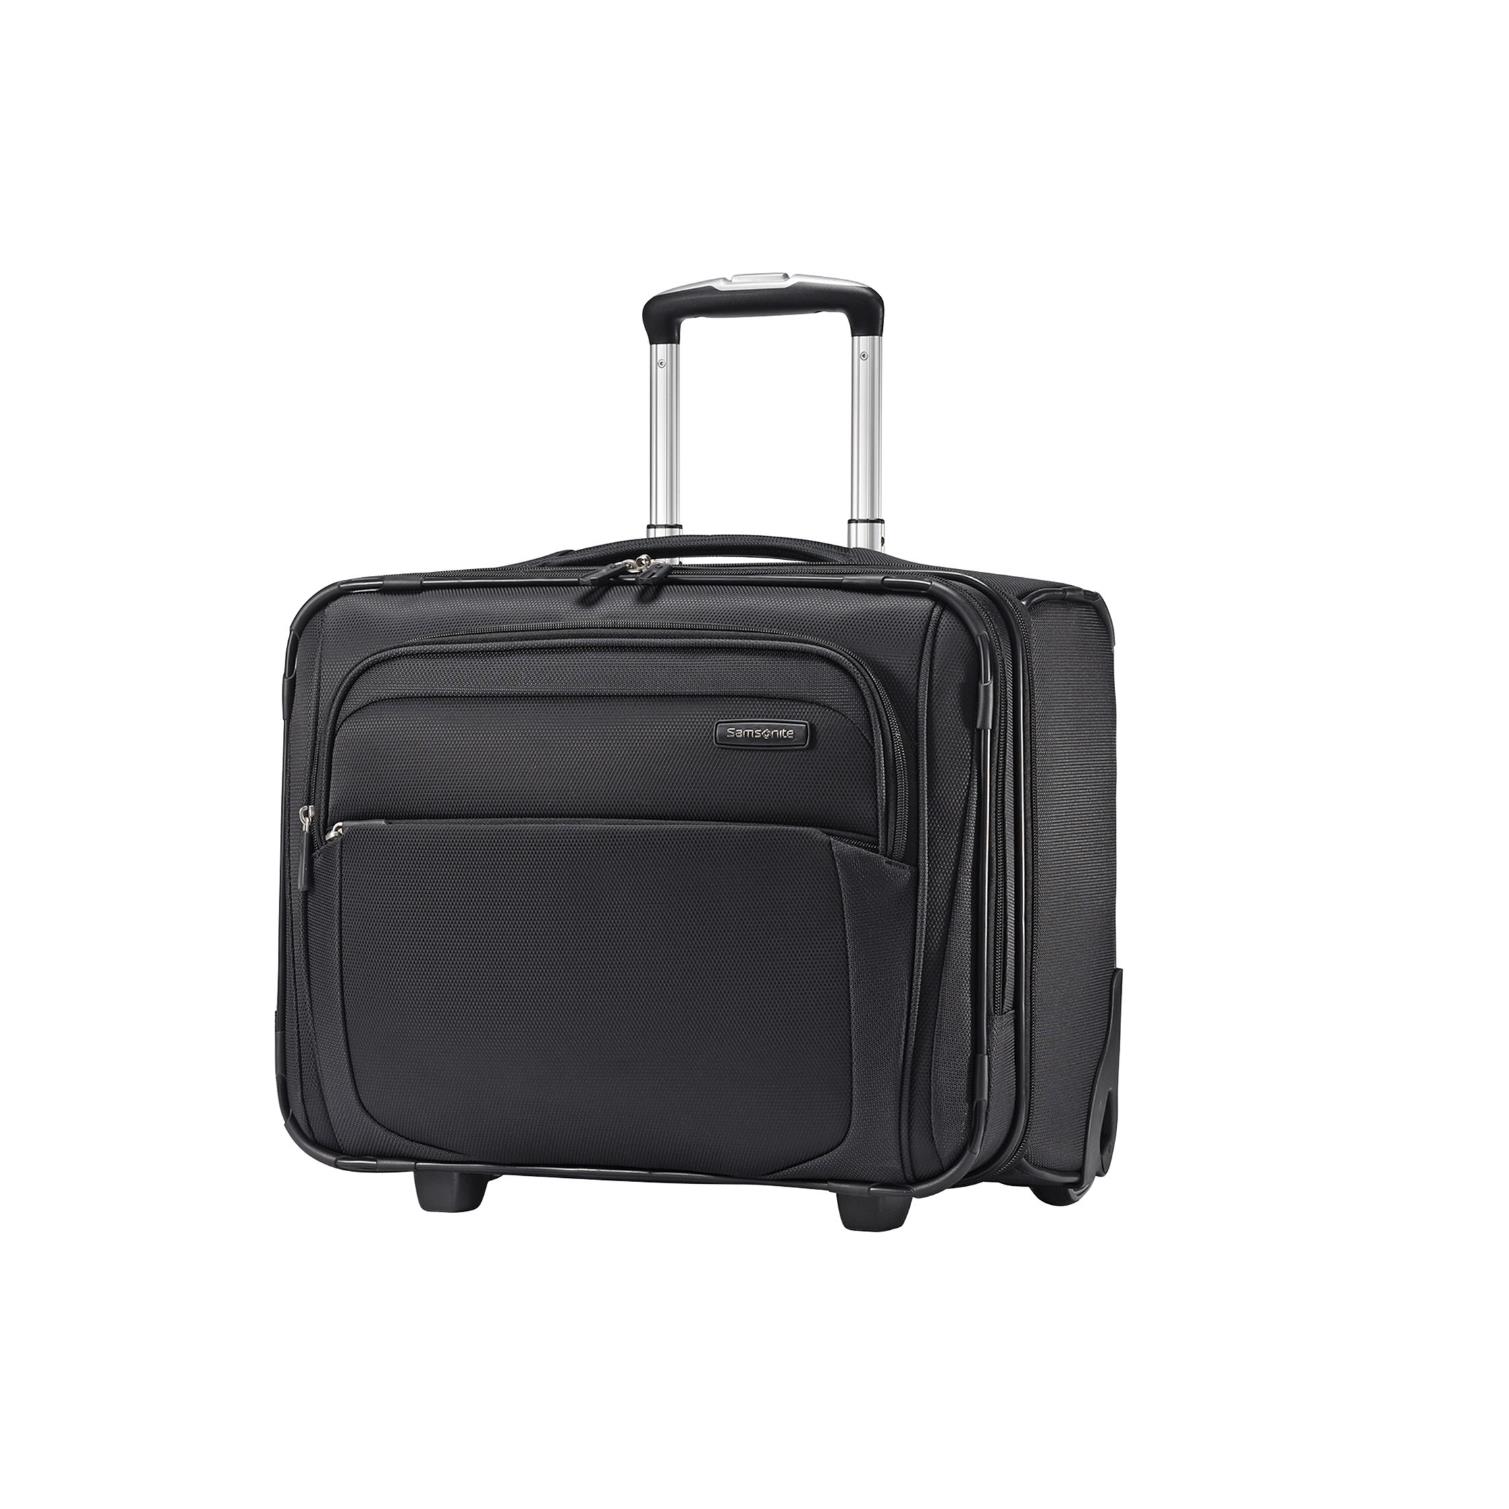 Samsonite Black Soar 2.0 Wheeled Carry-on Upright Suitcase 3123